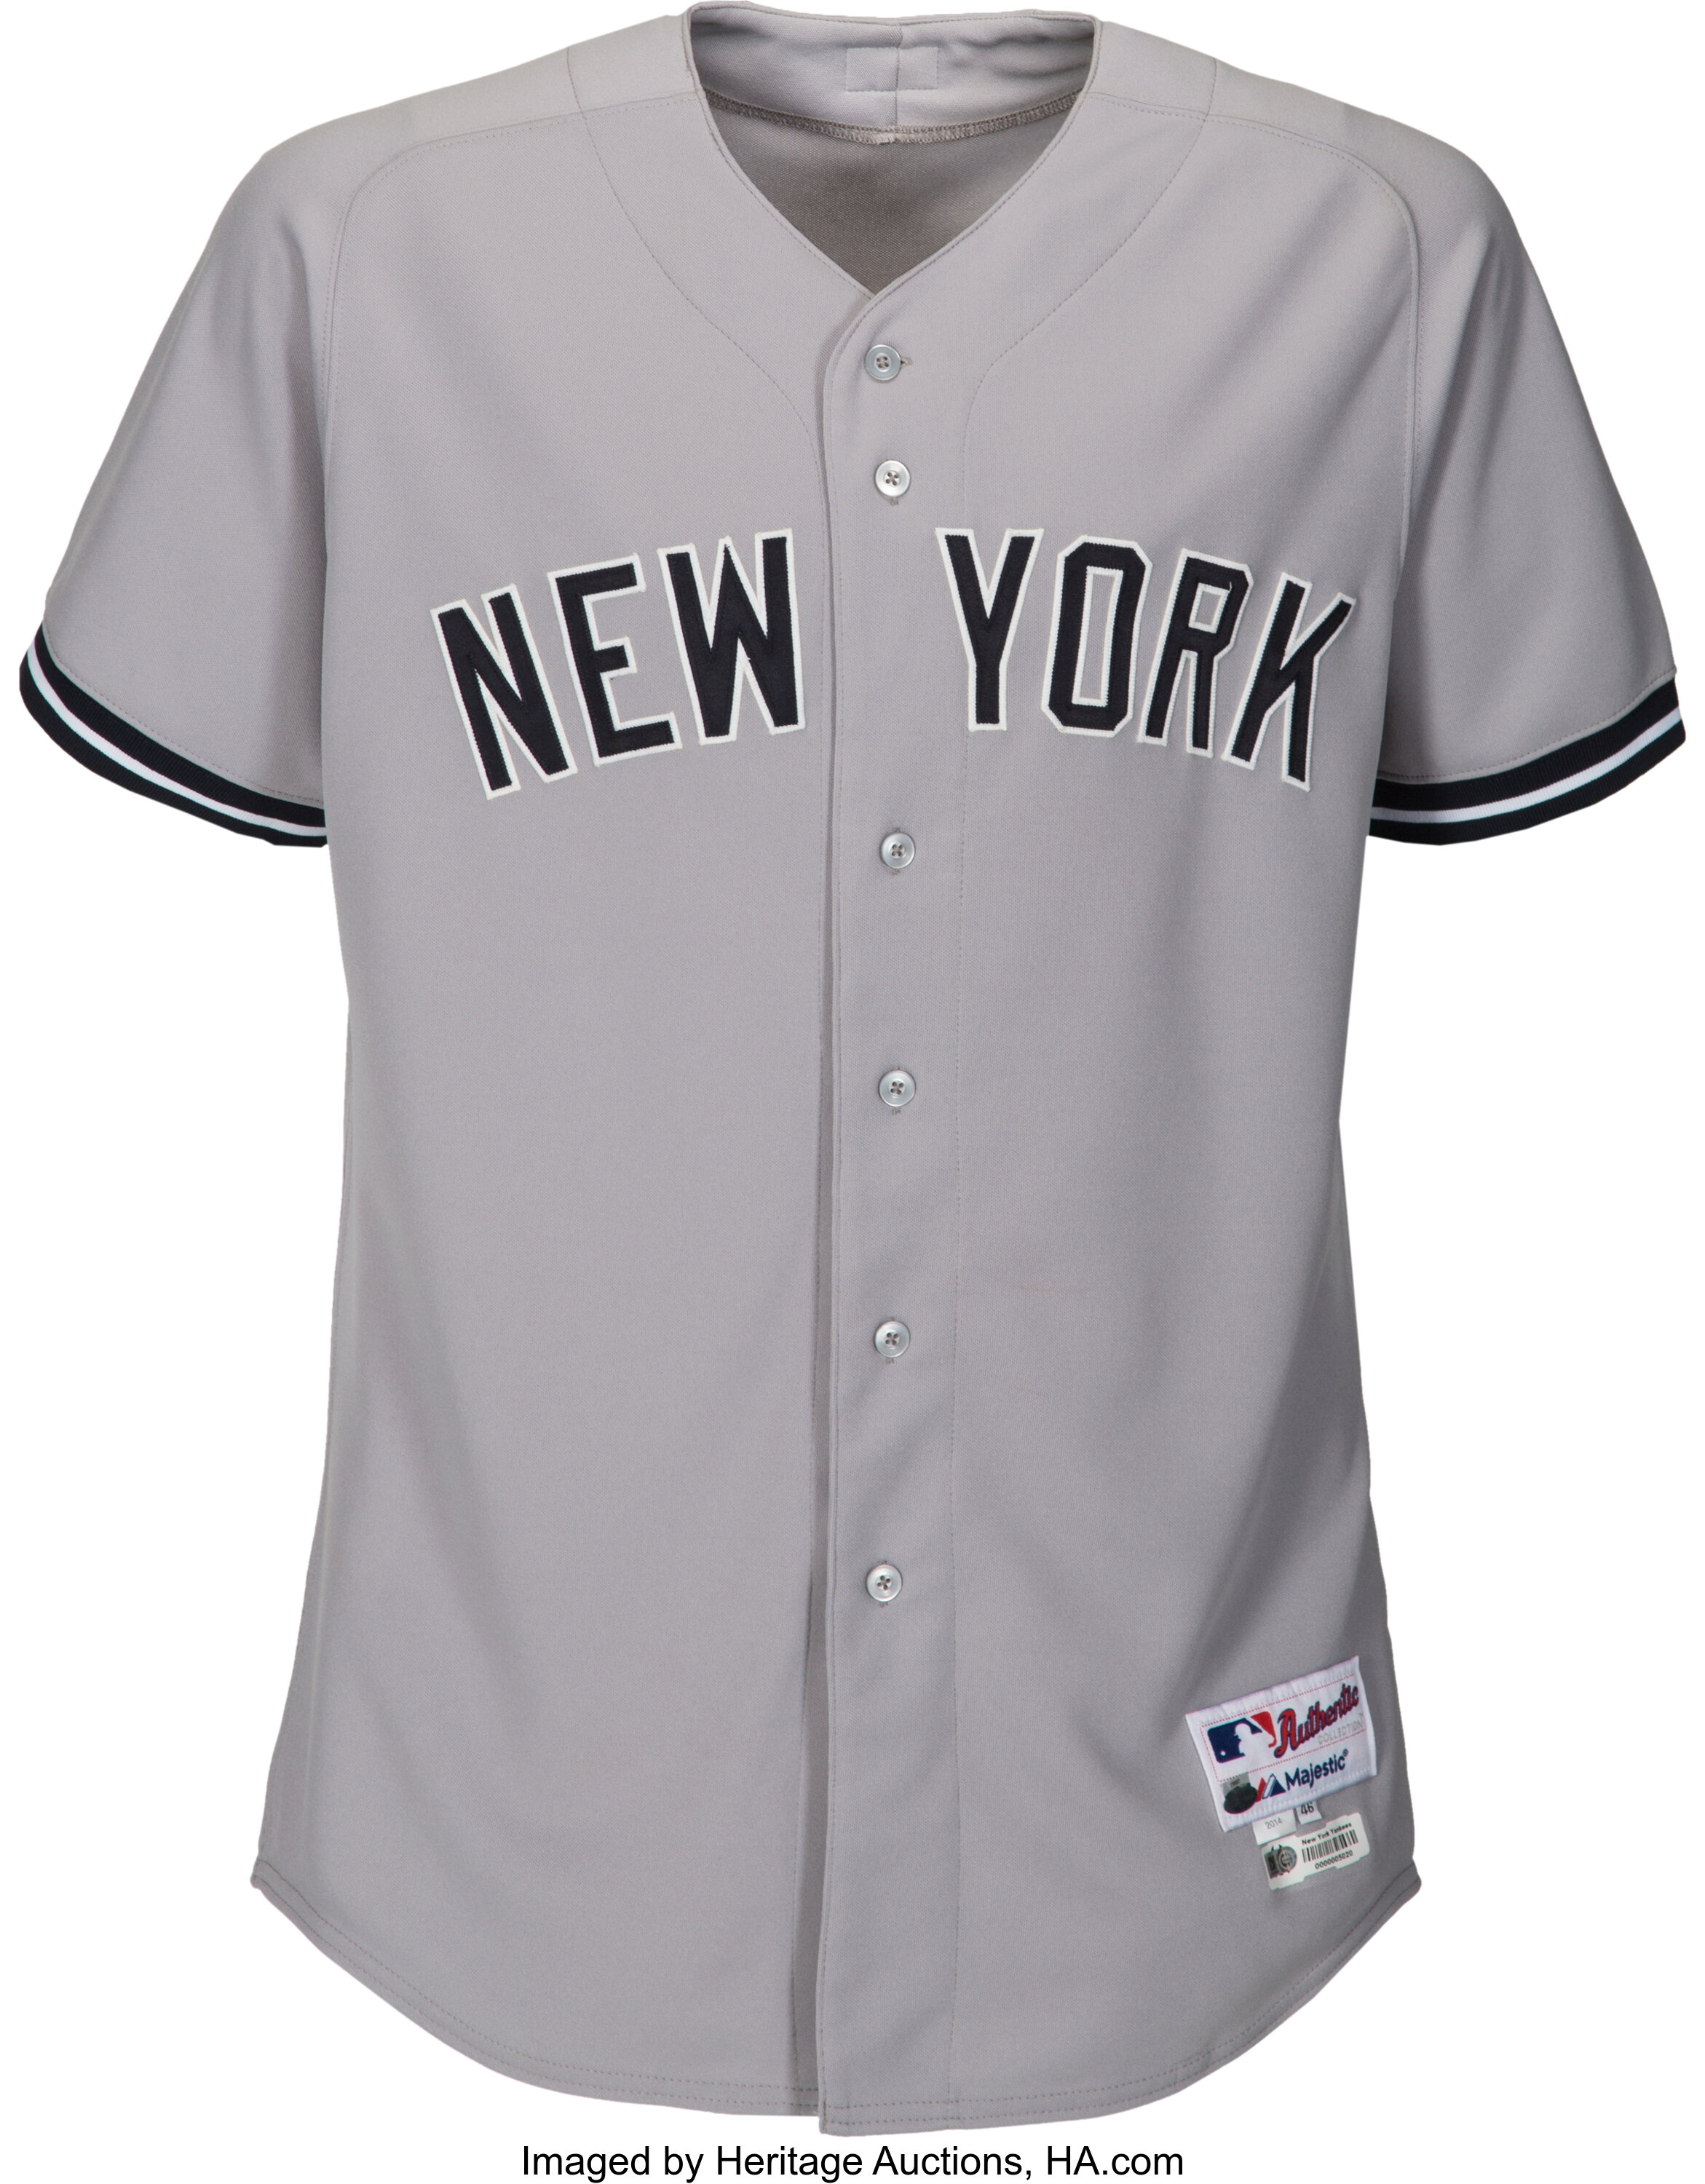 2014 Derek Jeter Game Worn & Signed New York Yankees Uniform from